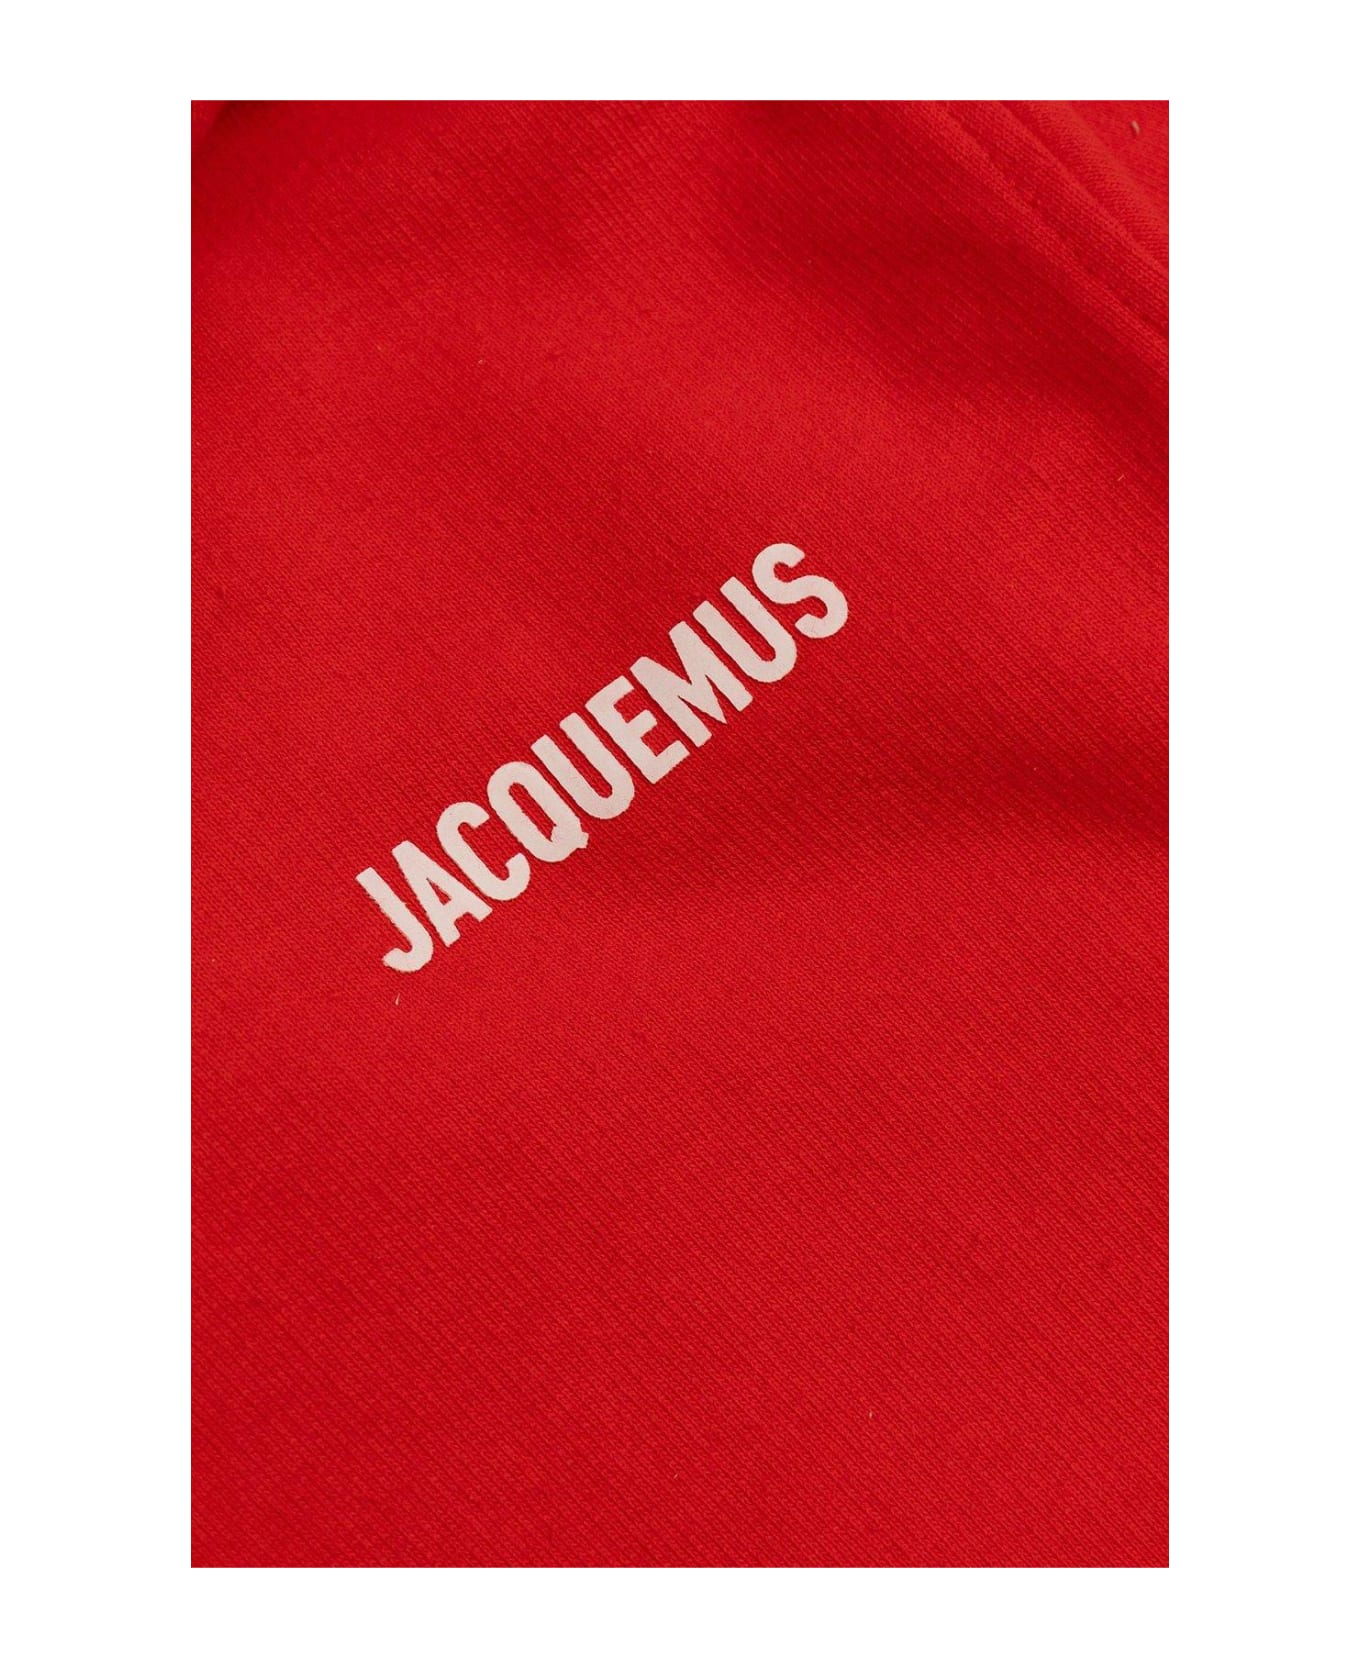 Jacquemus L'enfant Logo Printed Jersey Hoodie - RED